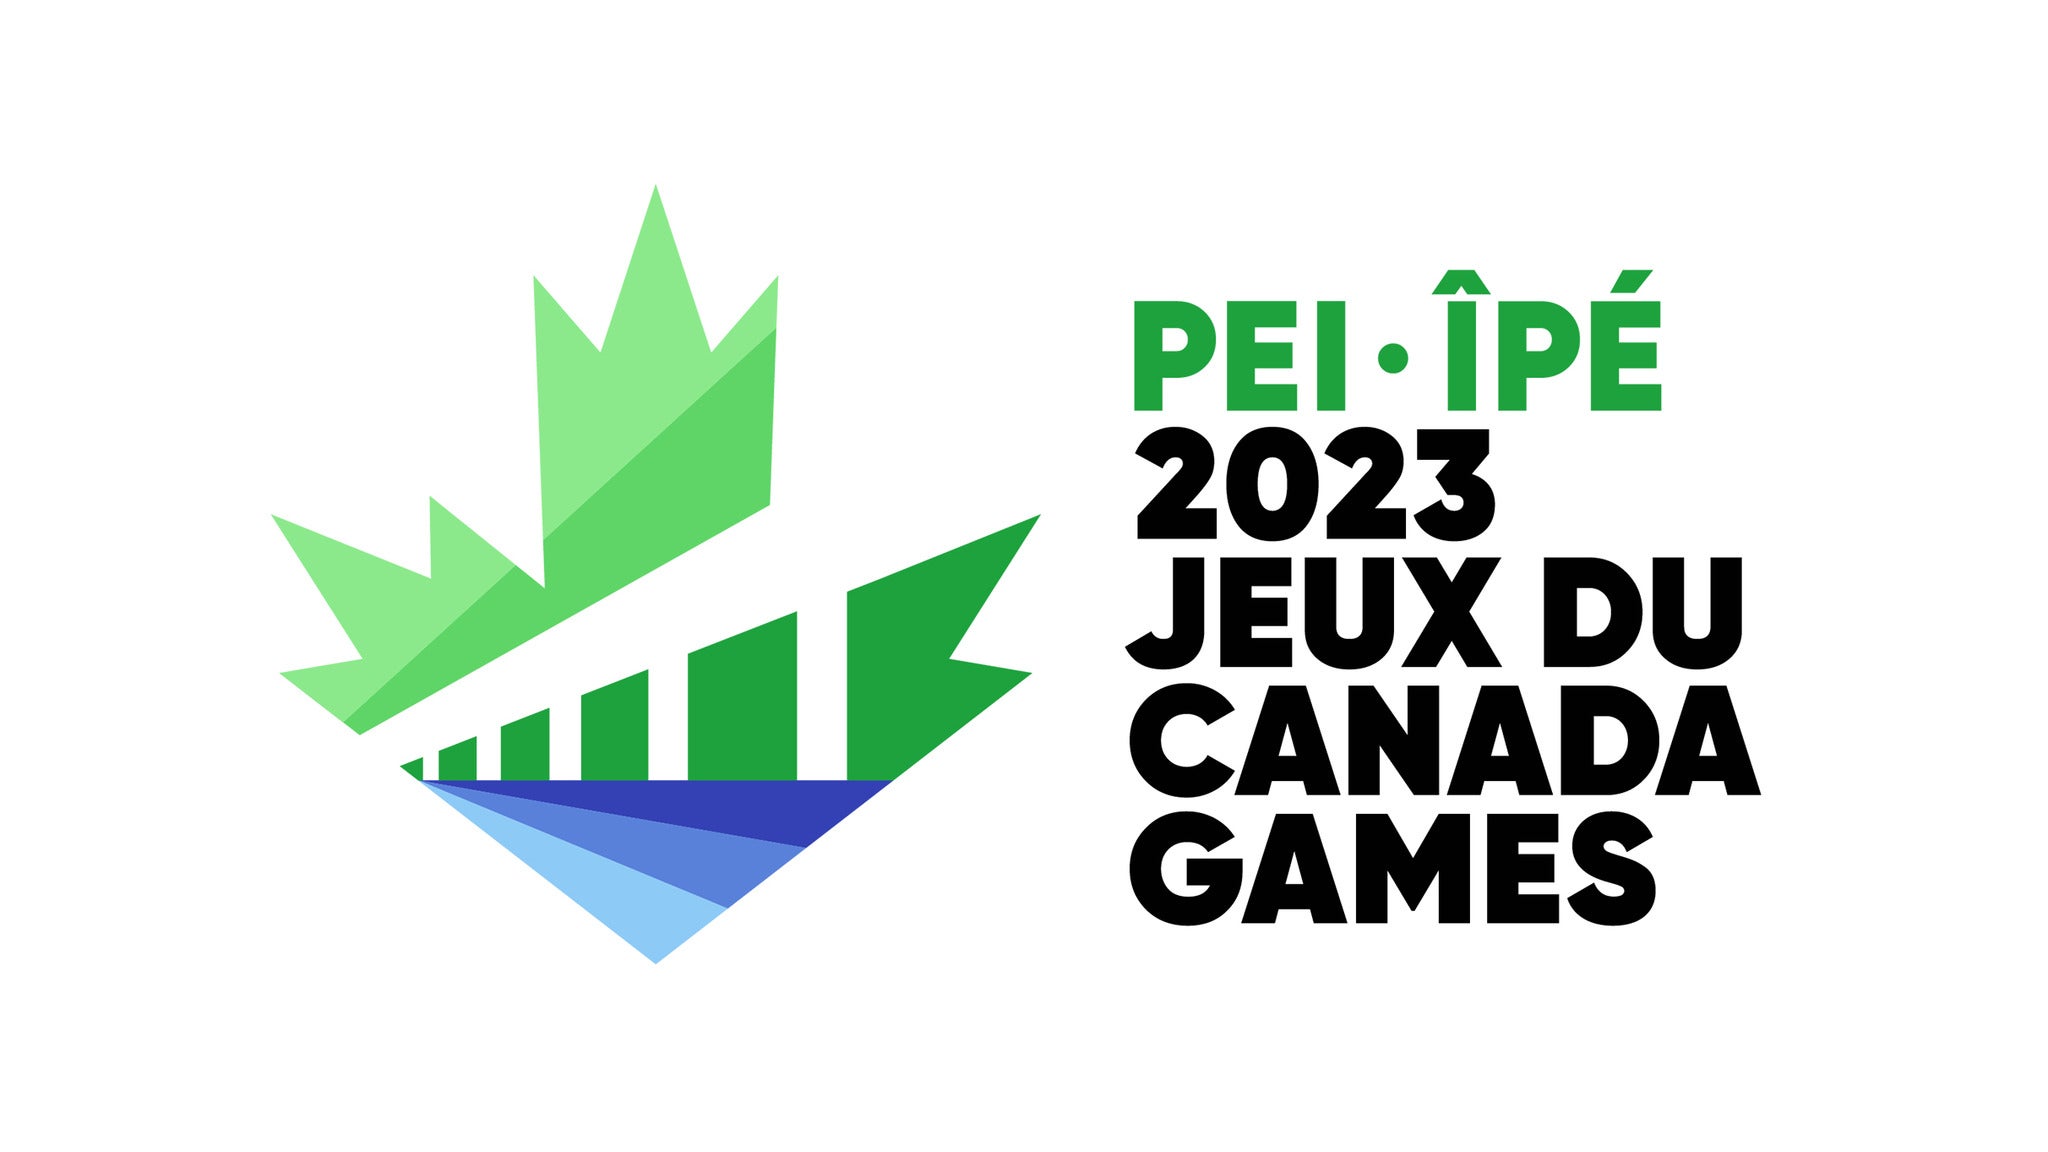 2023 Jeux du Canada Games - Feb 23 Single Day Pass / Billet De Journée in Summerside promo photo for Offer presale offer code